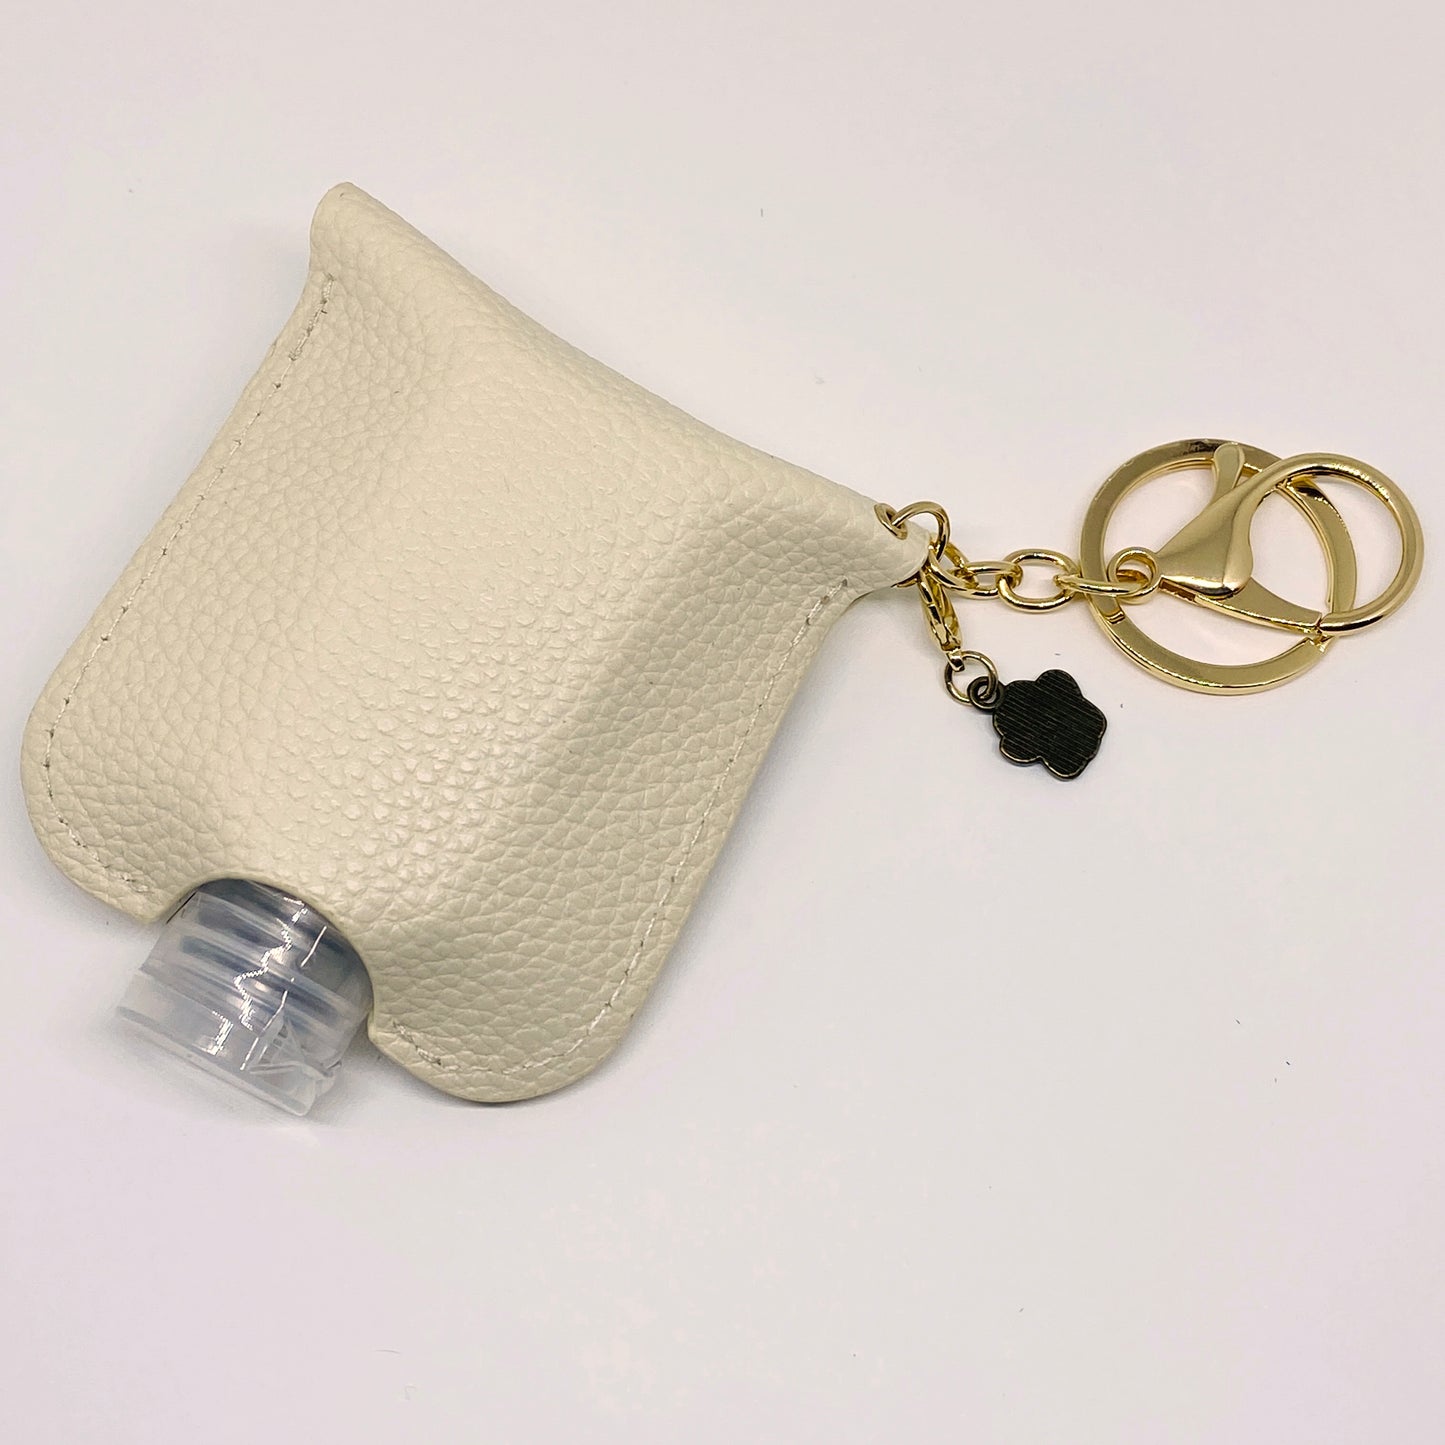 Genuine Leather Hand Sanitizer Holder with Snap Button, Dalmatian Print Sanitizer Holder Key Chain, Sanitizer Bottle Holder